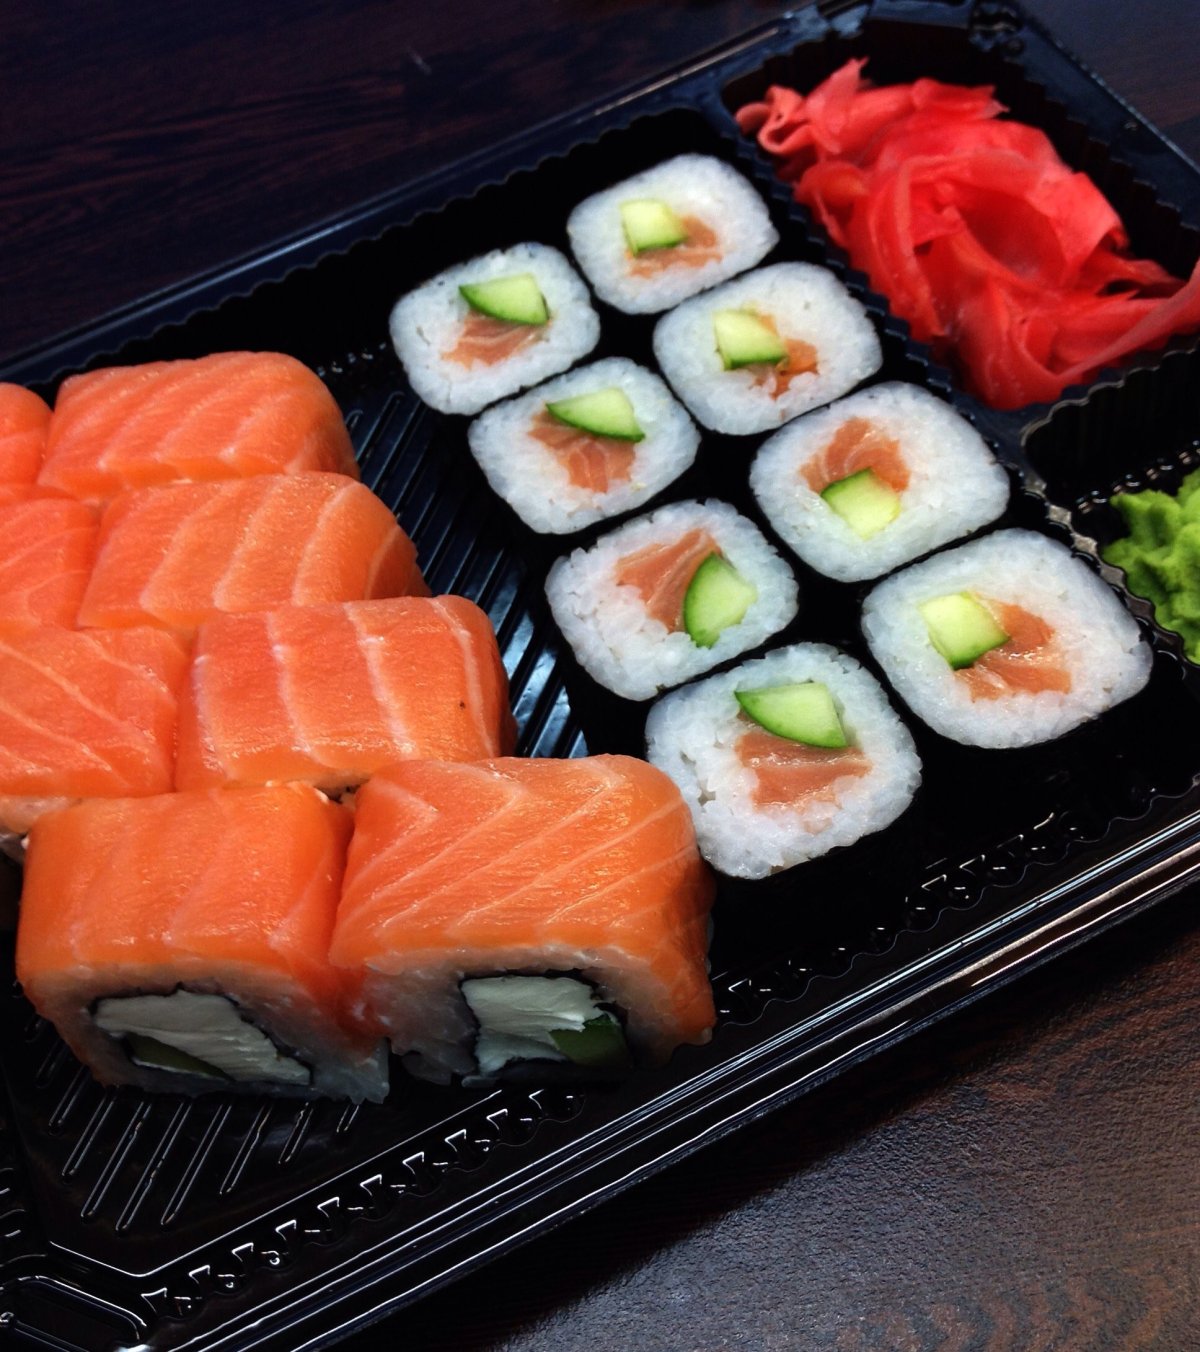 Заказать суши дешево и вкусно фото 26